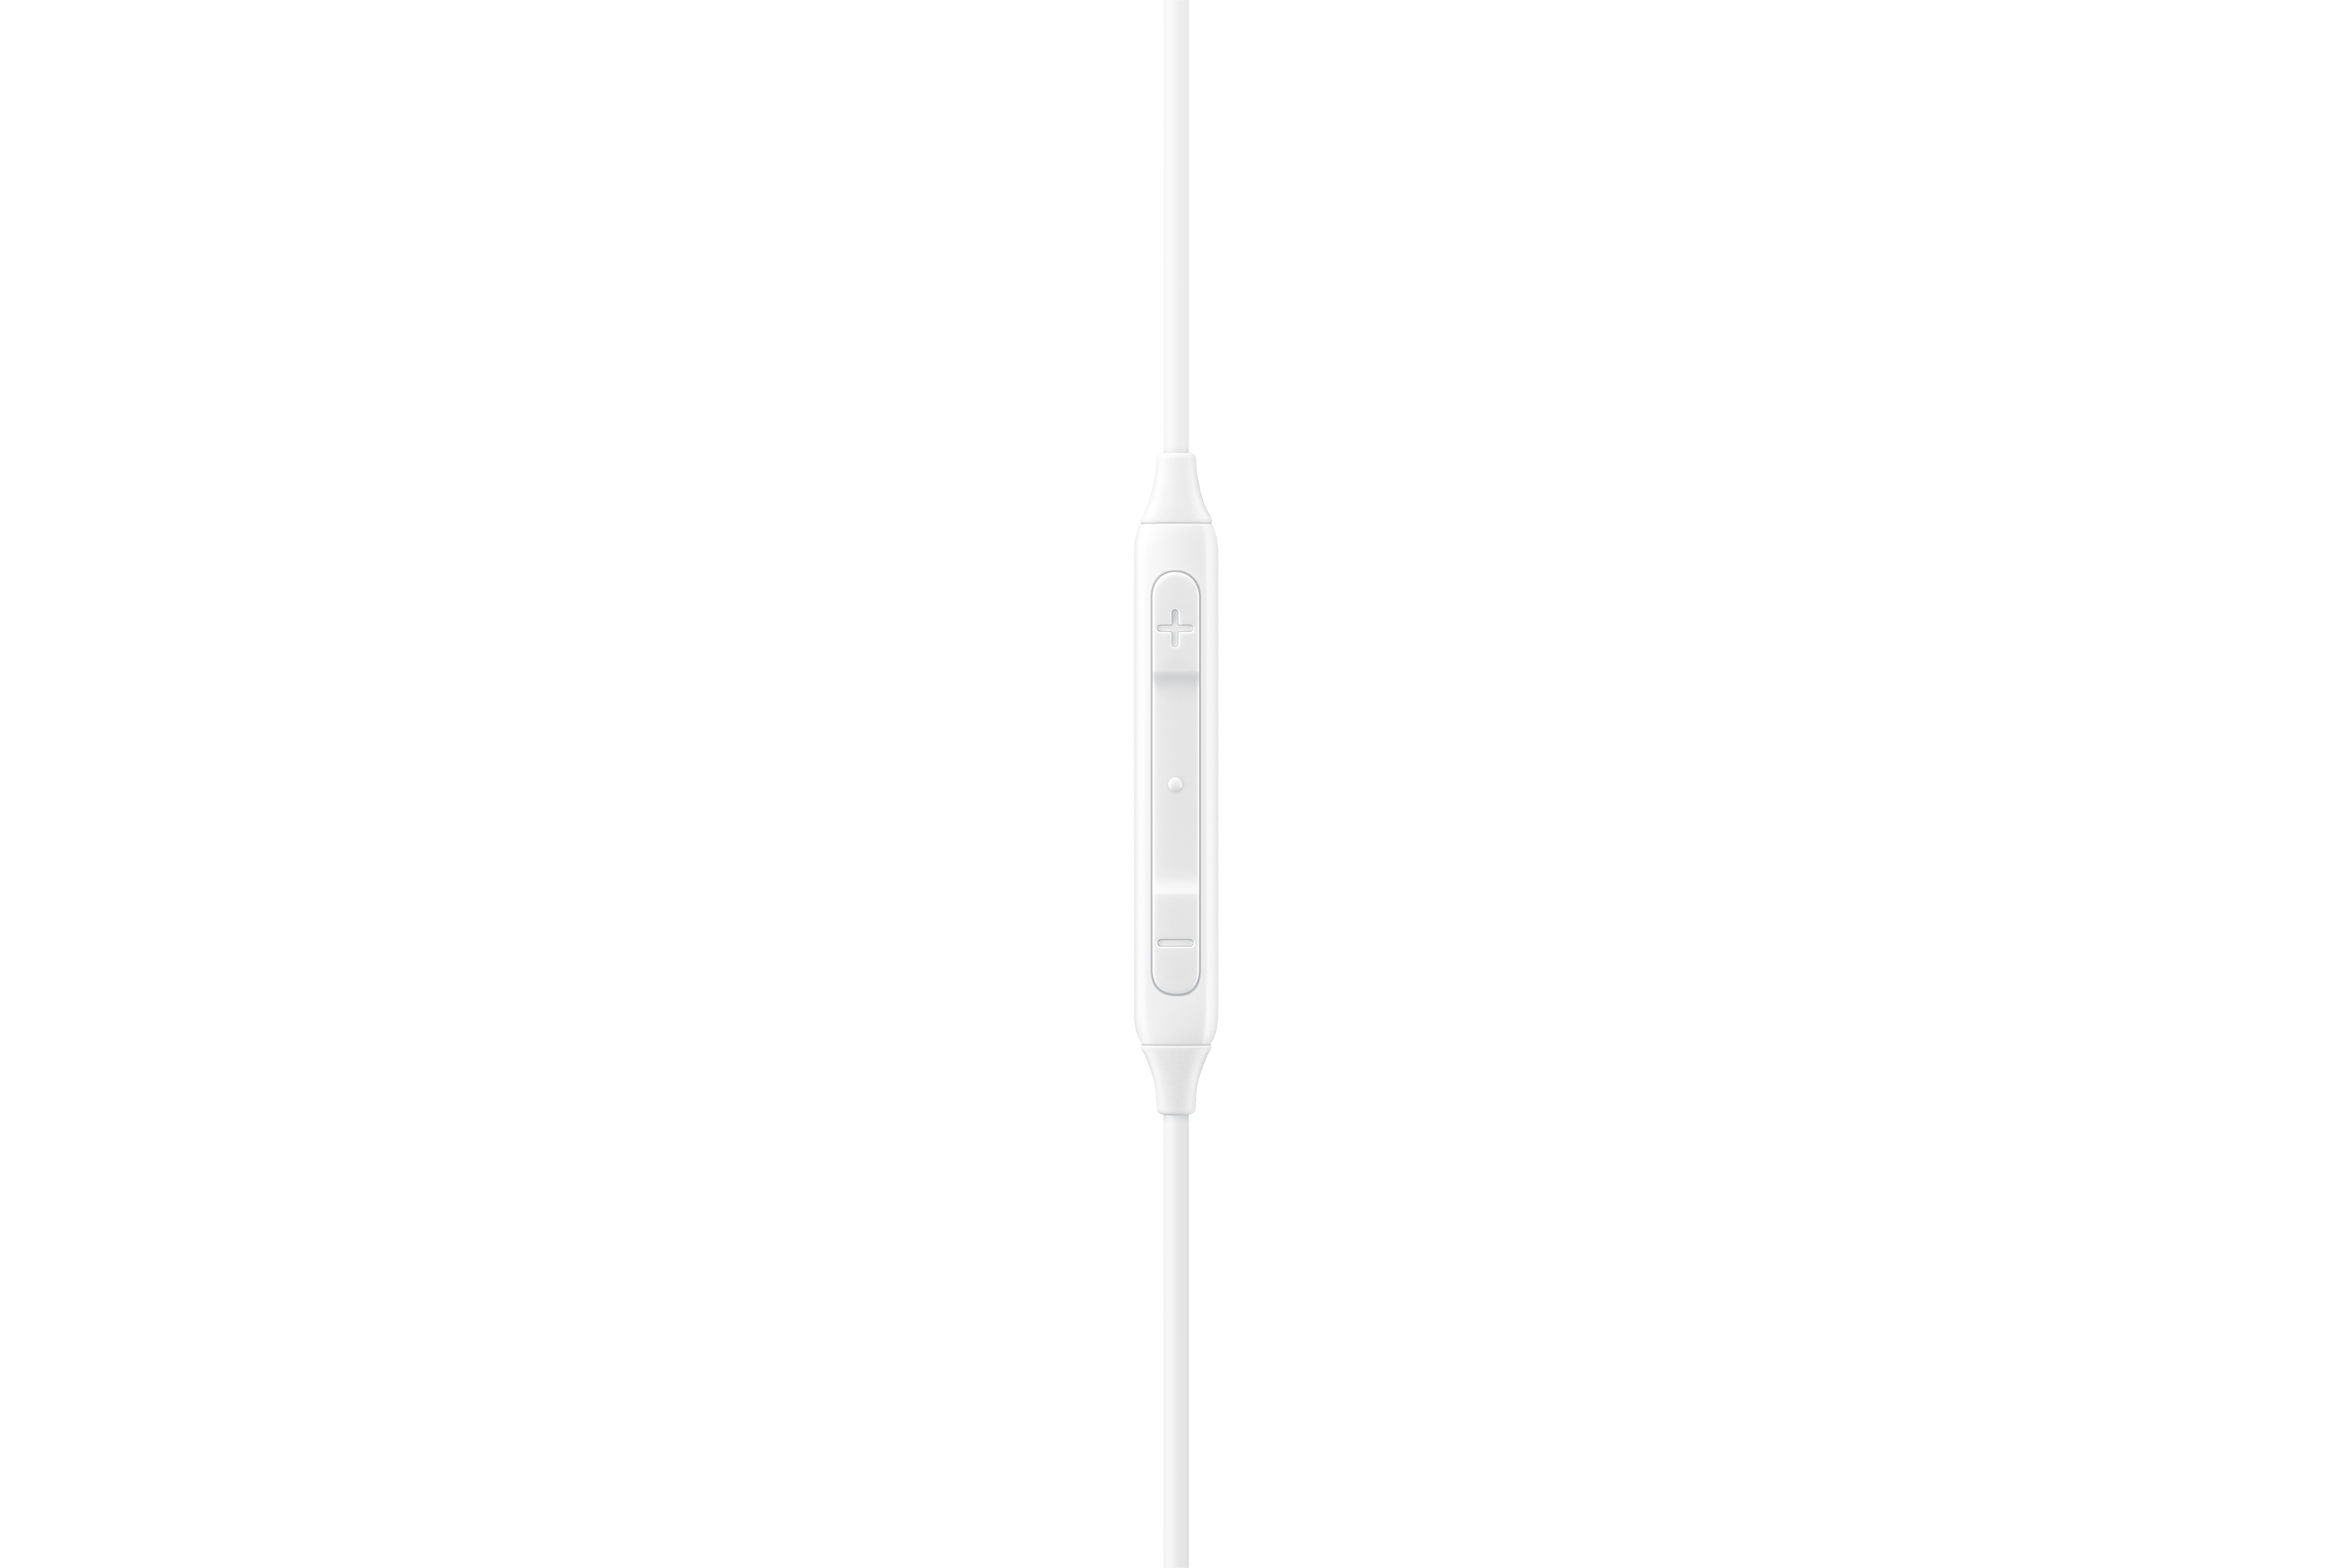 Samsung EO-IC100 - Kopfhörer - im Ohr - Anrufe &amp; Musik - Weiß - Binaural - Knopf